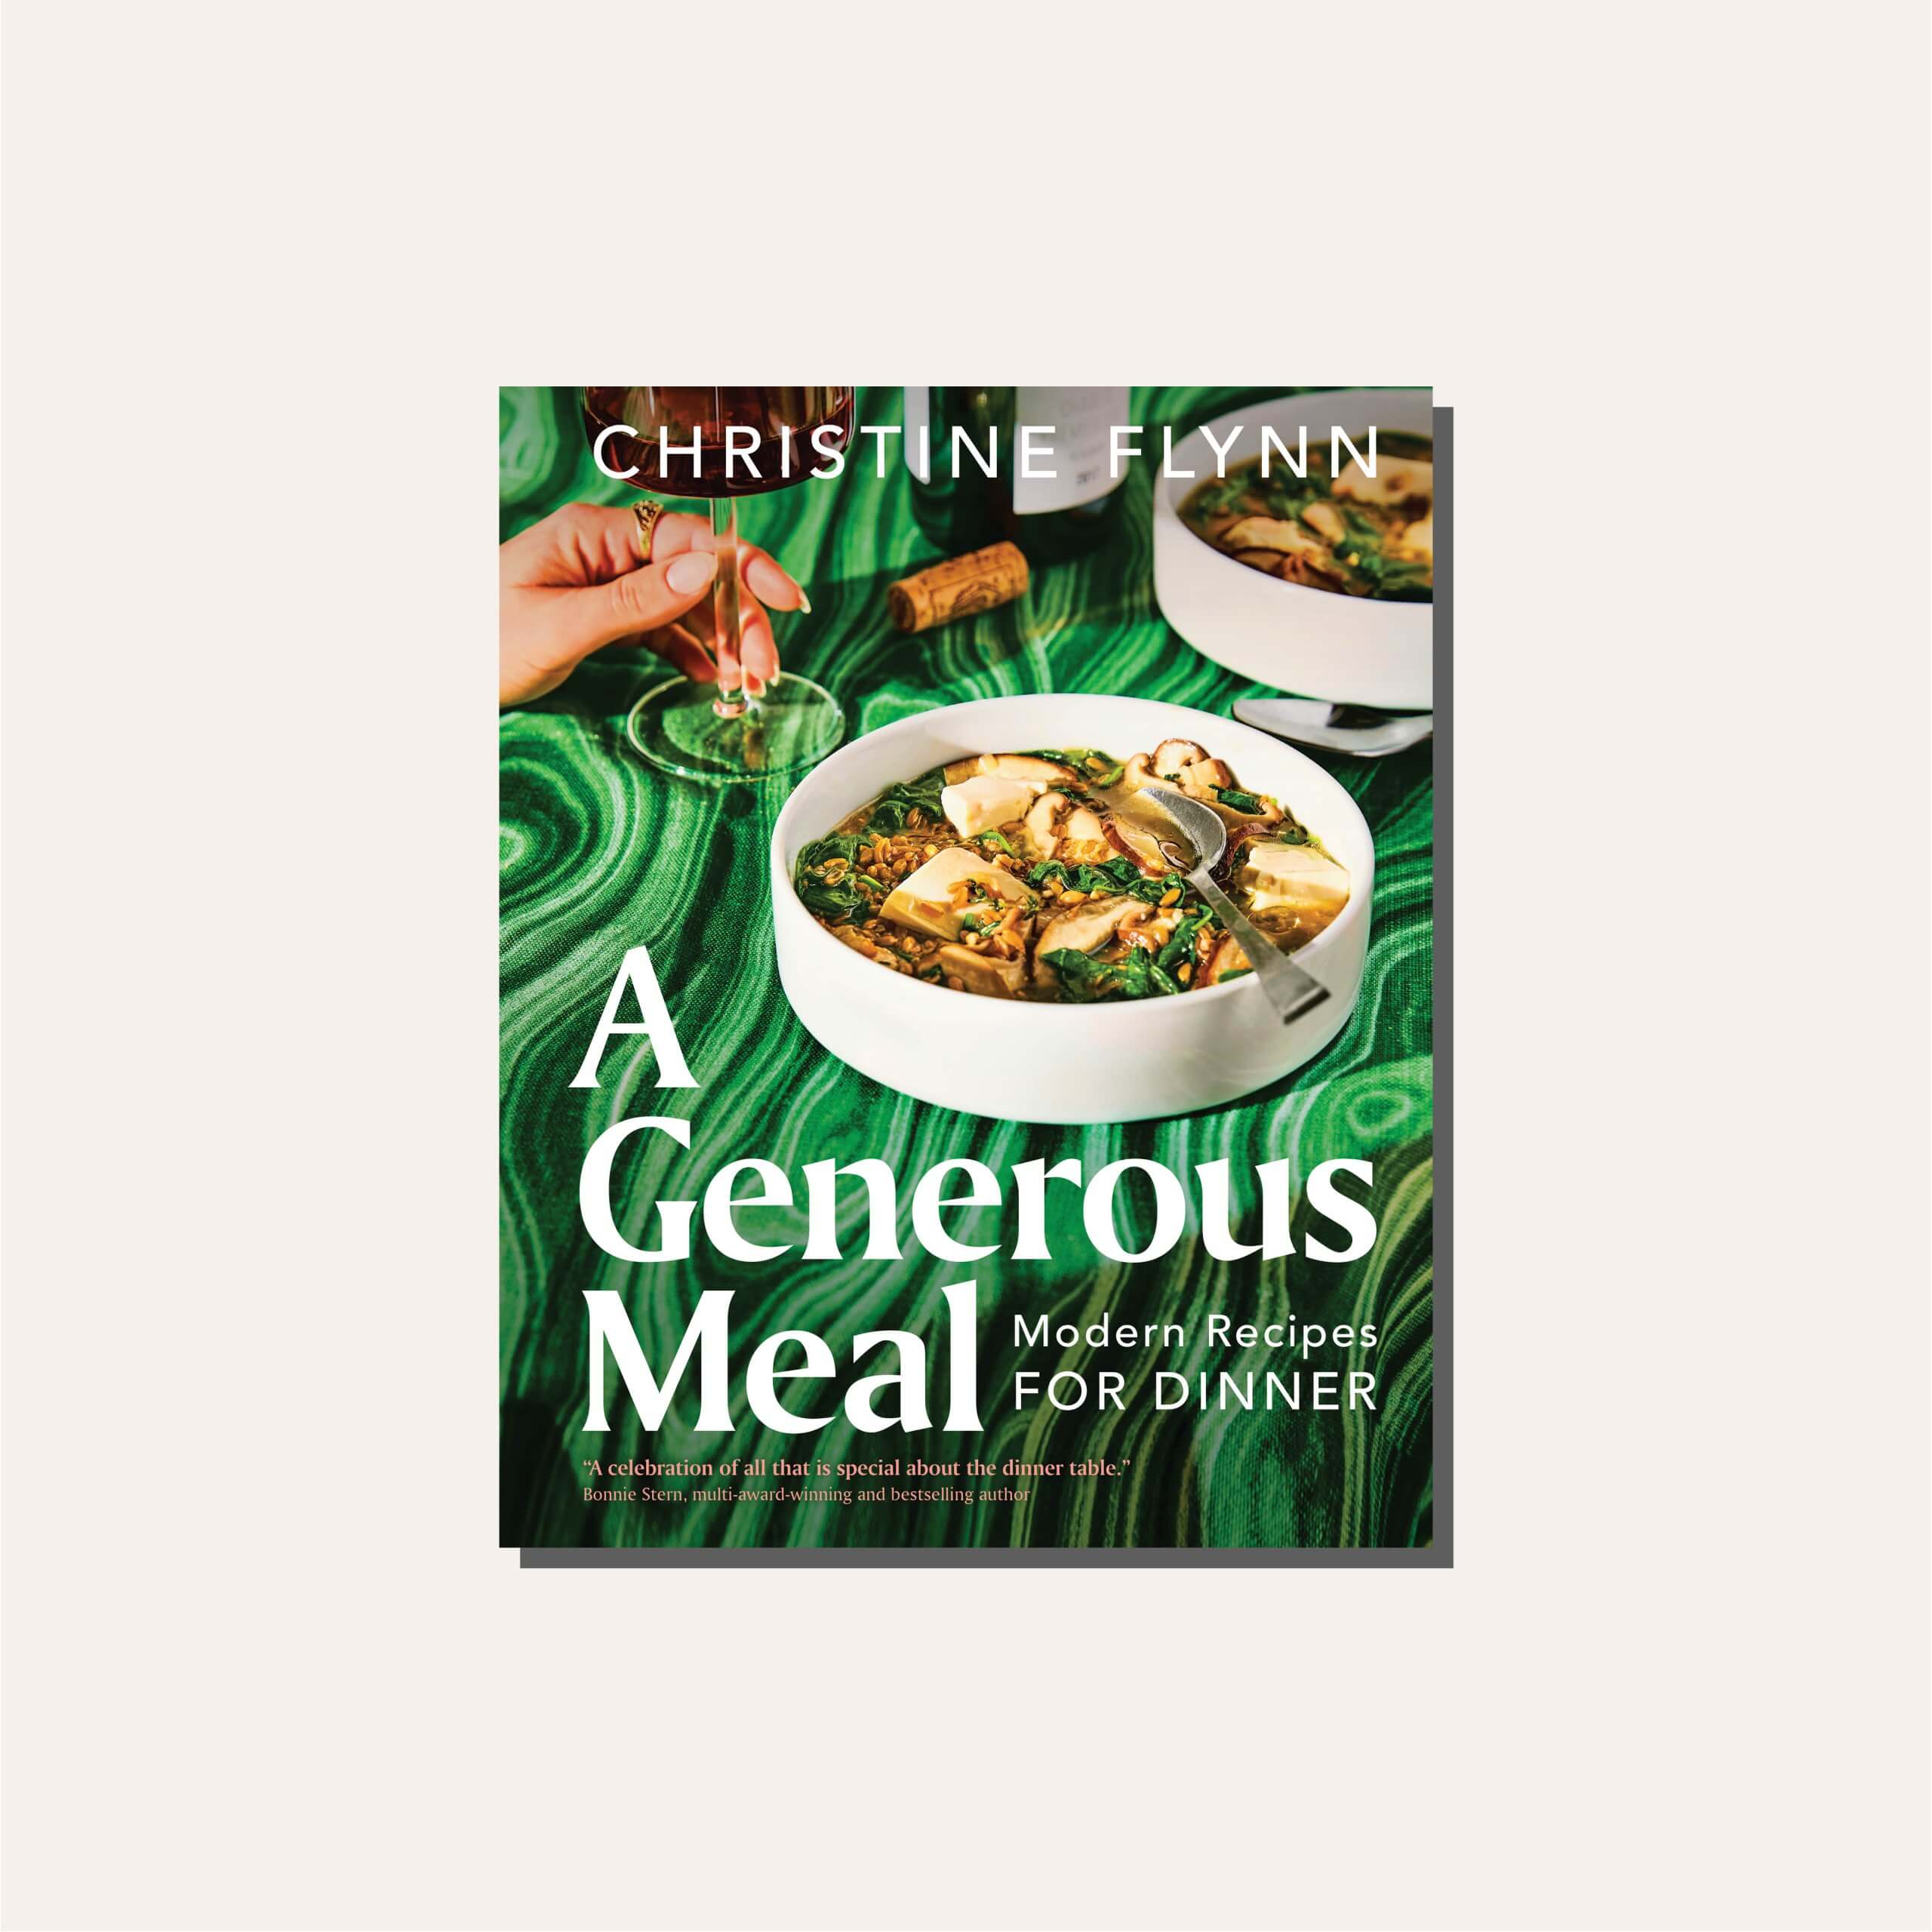 A deep green cookbook cover in a light tan frame